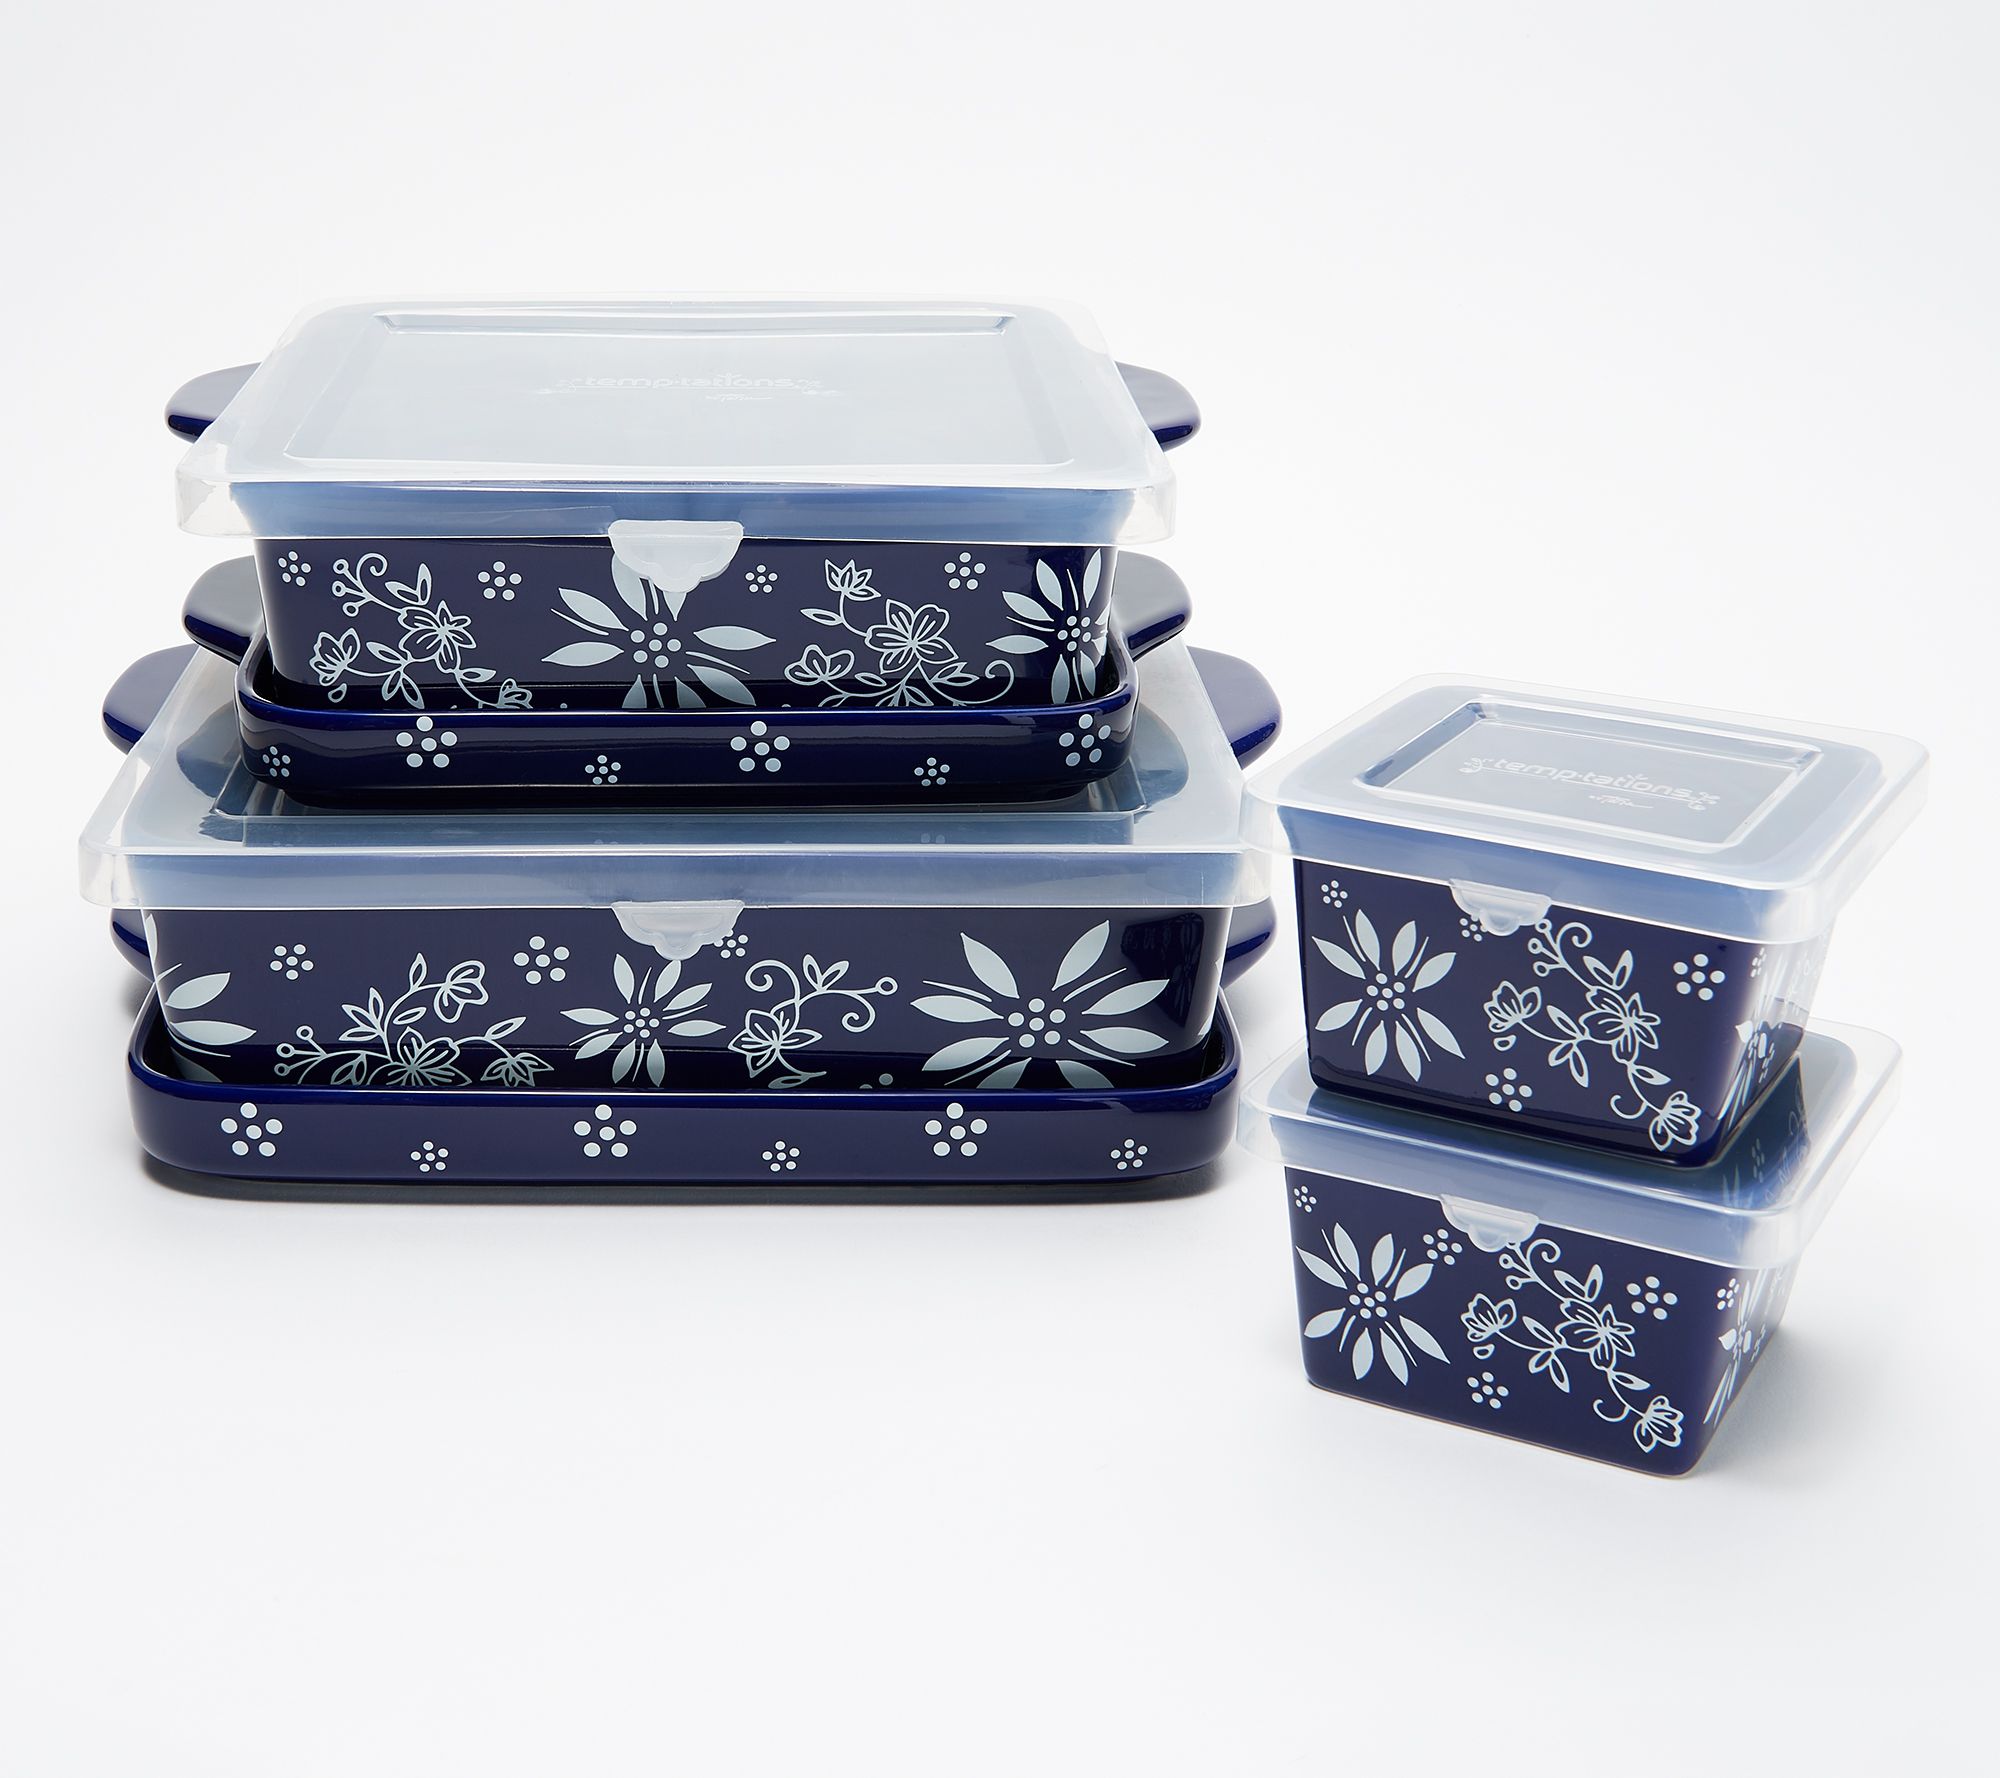 Best Buy: Cuisinart 6 Piece Nonstick Bakeware Set Silver SMB-6